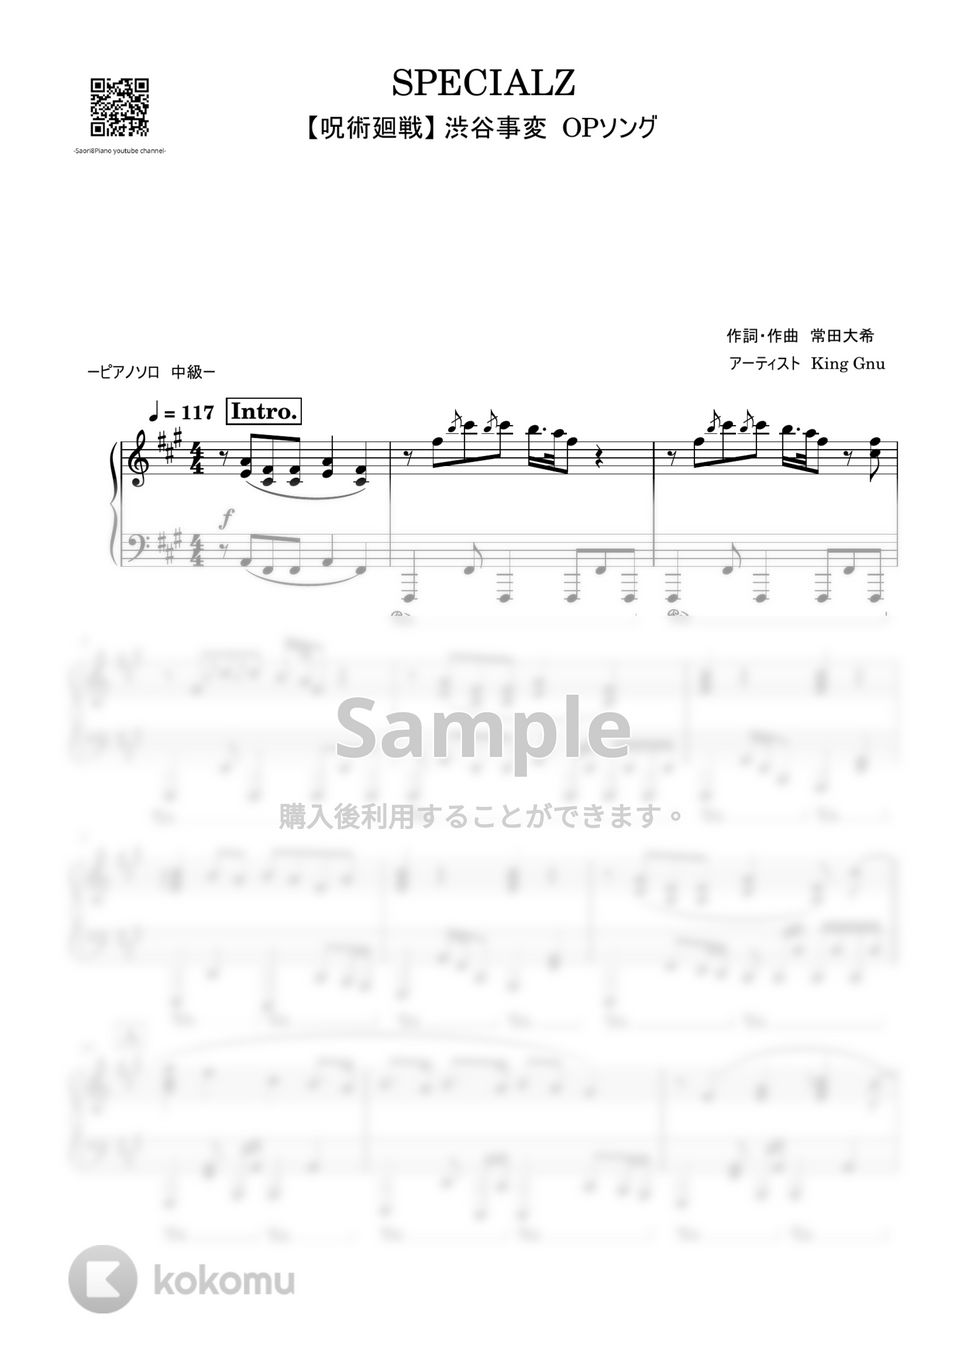 King Gnu - SPECIALZ (呪術廻戦『渋谷事変』OPソング/中級レベル) by Saori8Piano